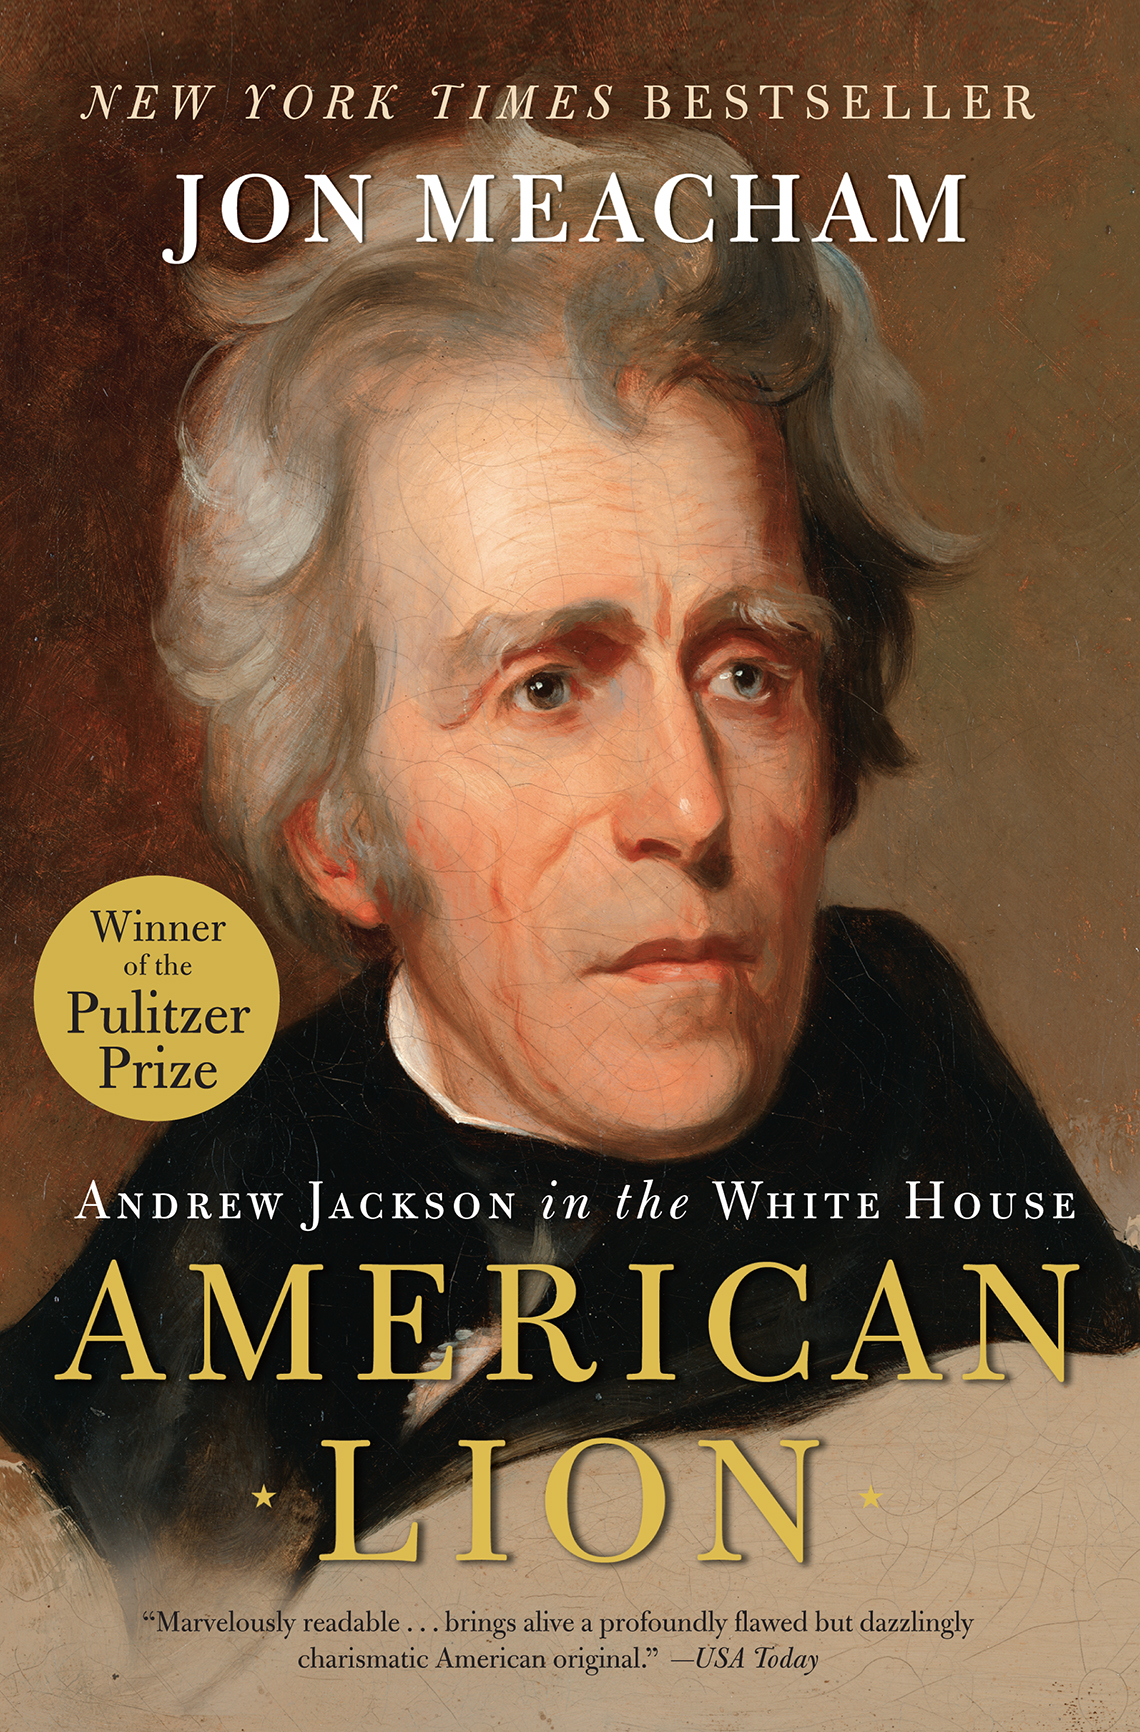 American Lion, Andrew Jackson in the White House, por Ron Meacham.